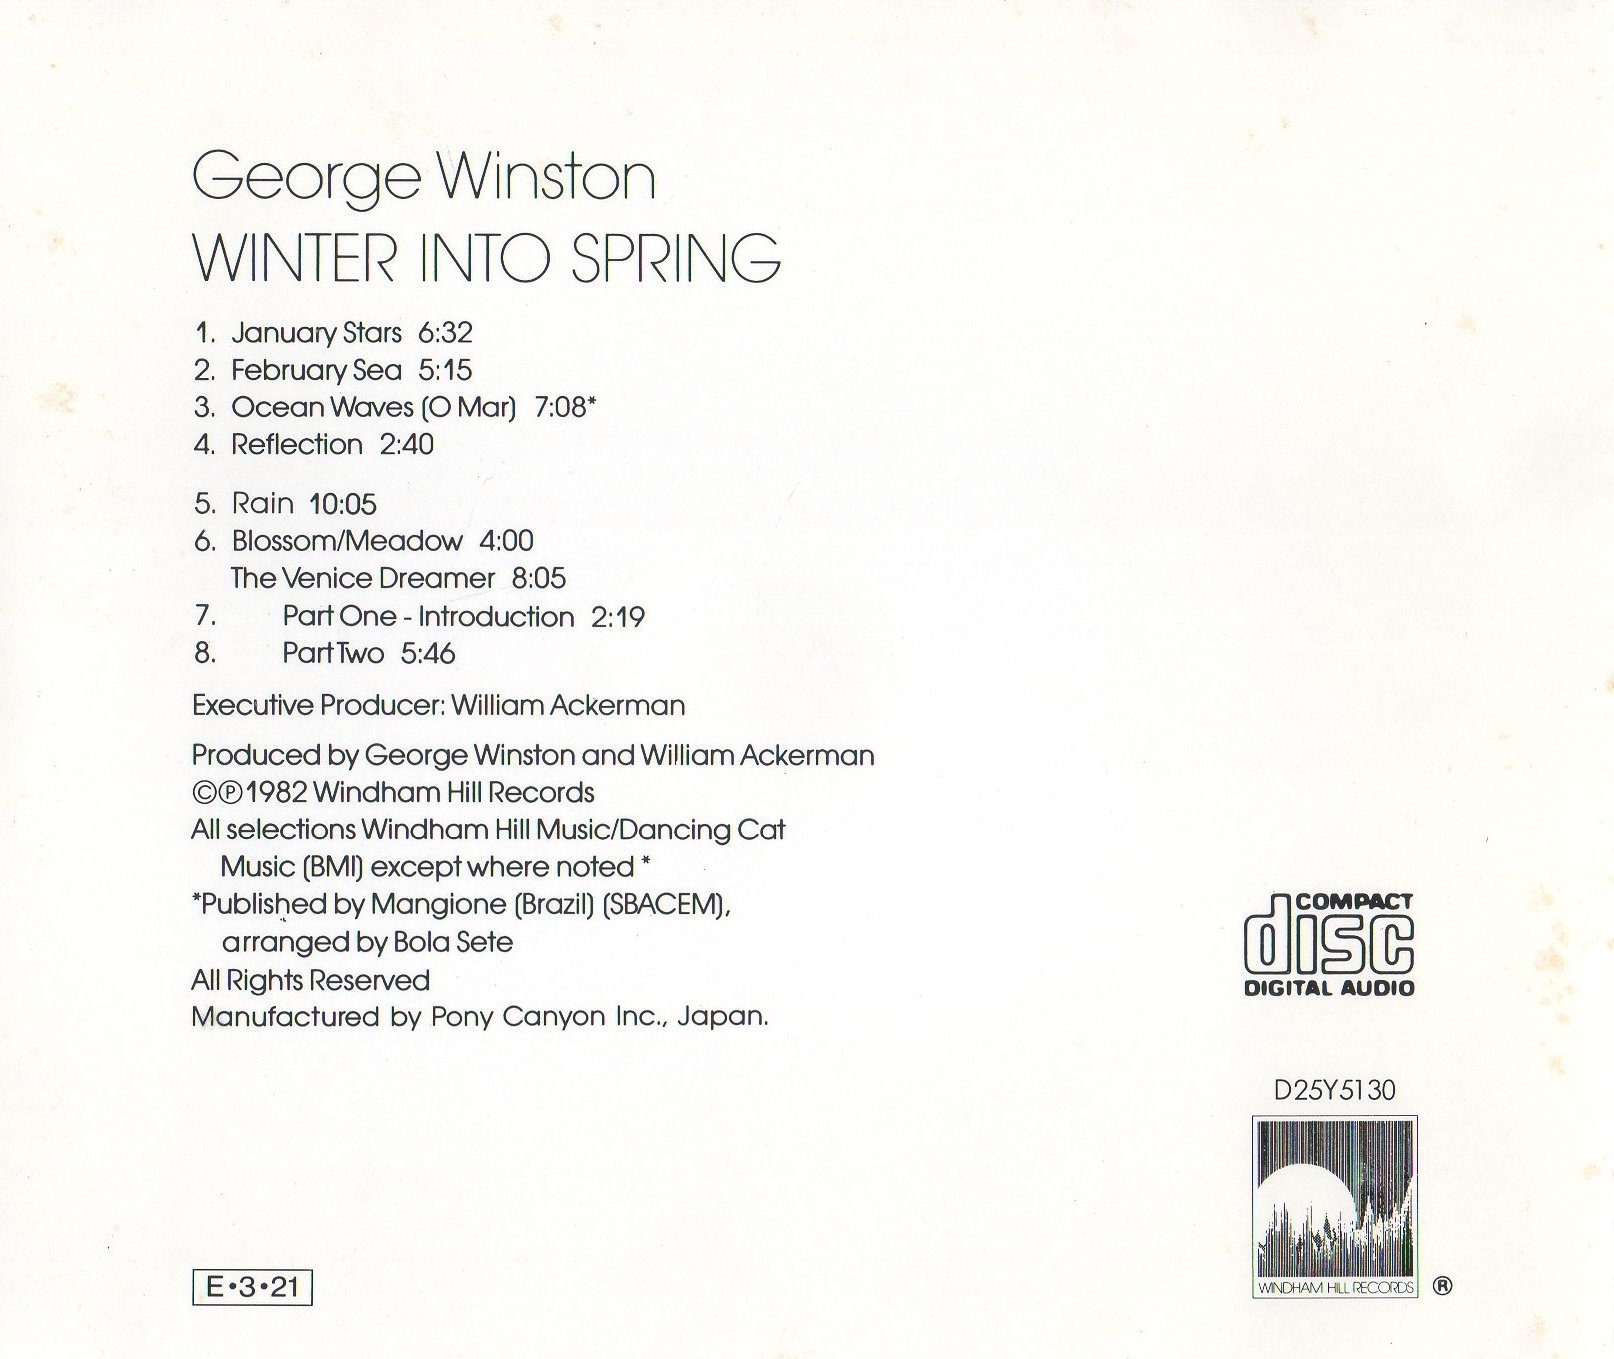  George * Winston George Winston / winter * in tu* springs Winter into Spring / 1989.03.21 / 1982 год произведение / D25Y-5130